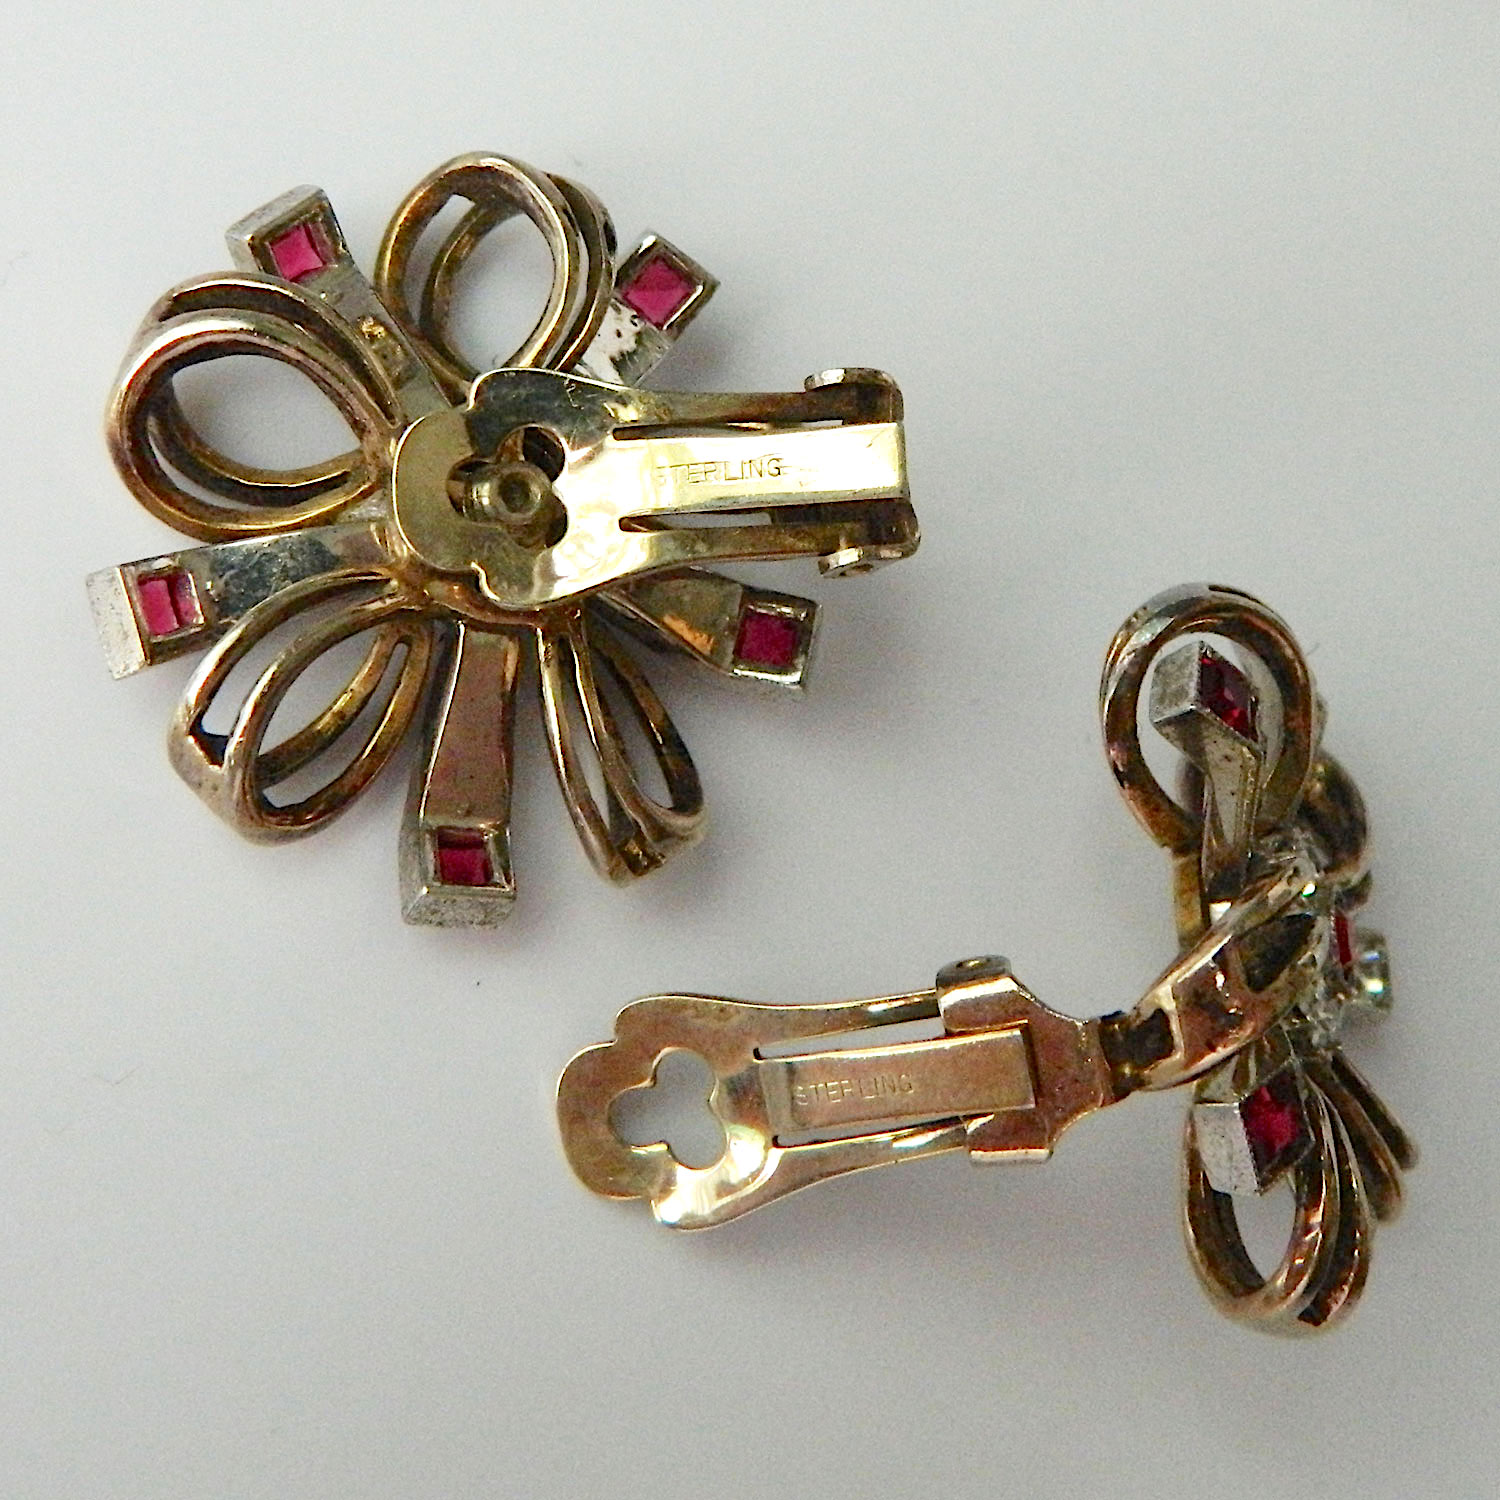 Rhinestone brooch and earring set